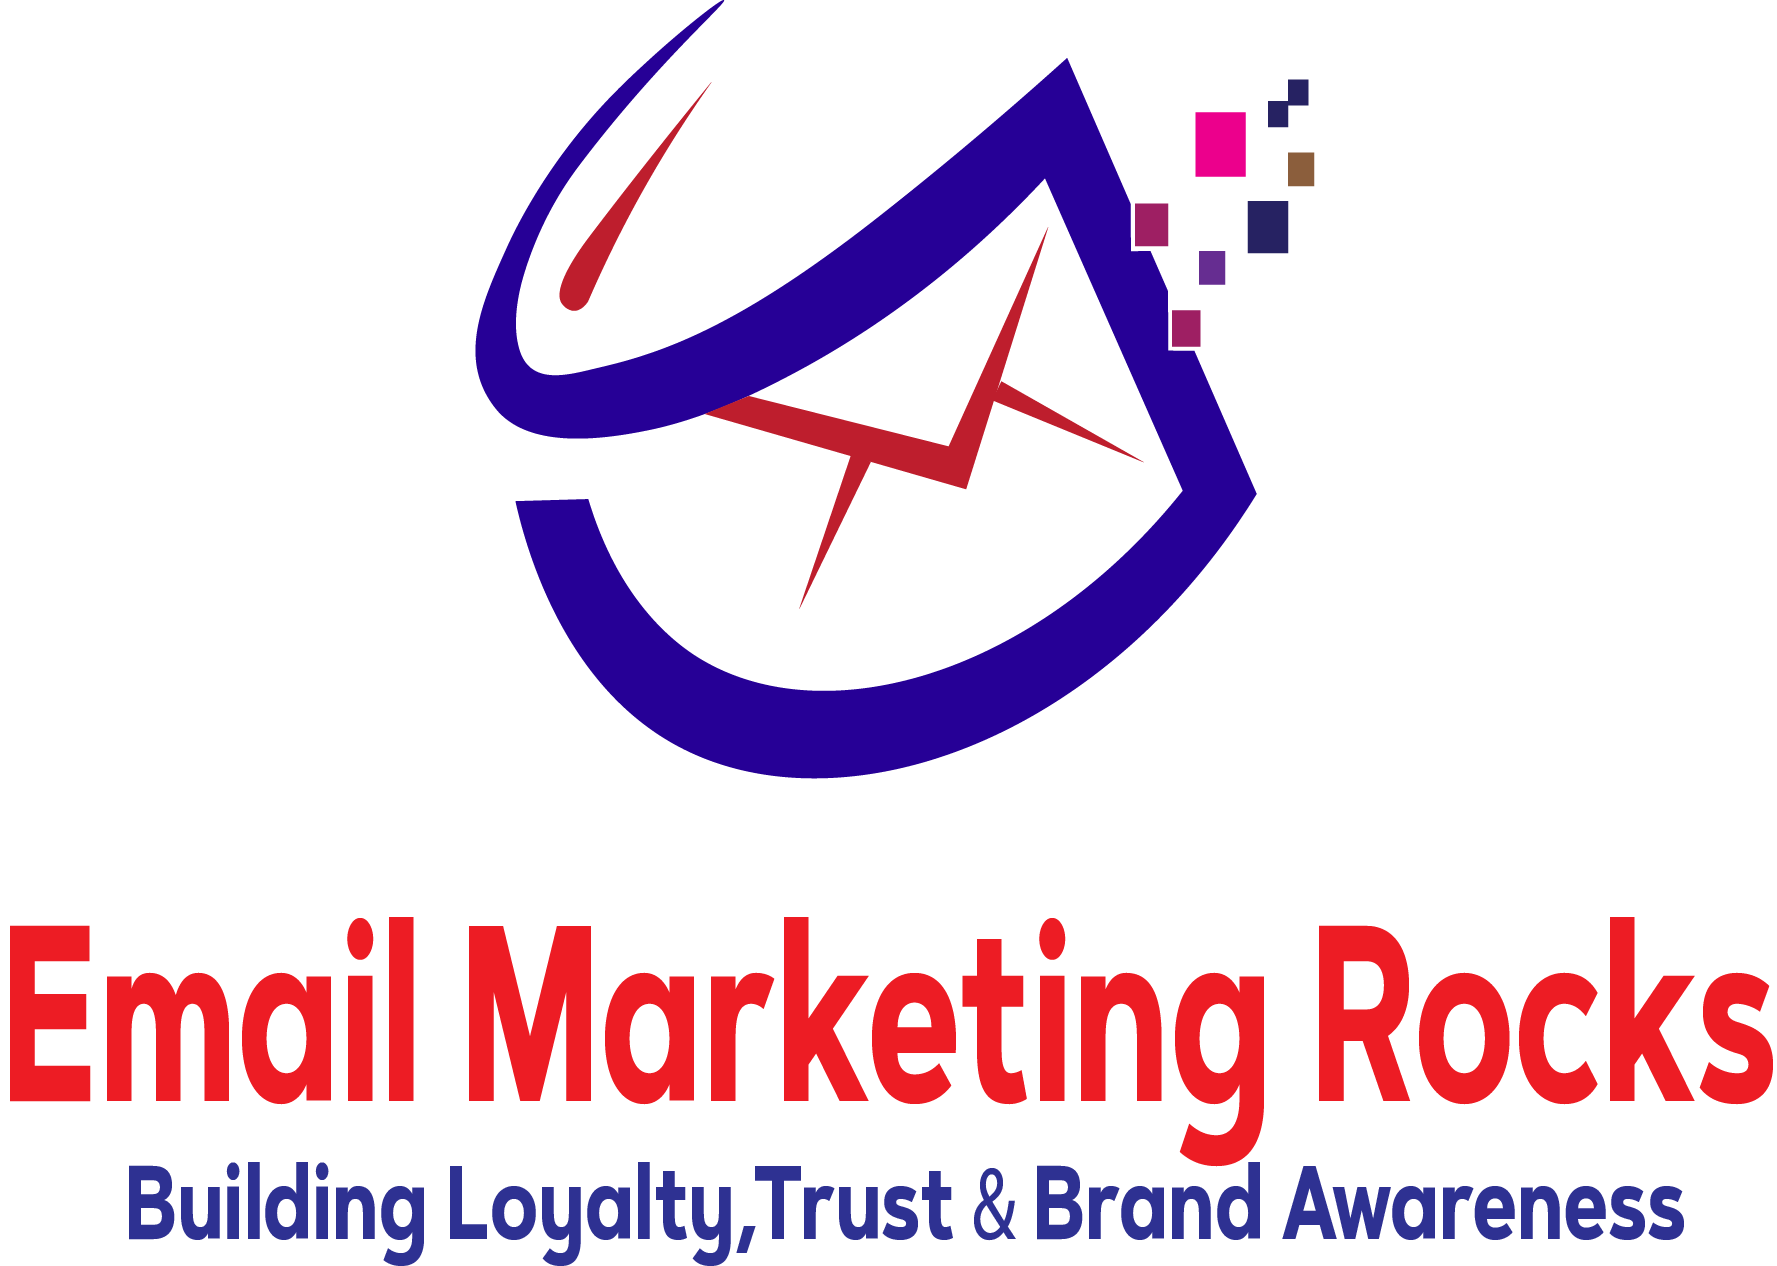 Email Marketing Rocks

Building Loyalty, Trust & Brand Awareness - Email Marketing Rocks

Building Loyalty, Trust & Brand Awareness - Email Marketing Rocks

Building Loyalty, Trust &amp; Brand Awareness